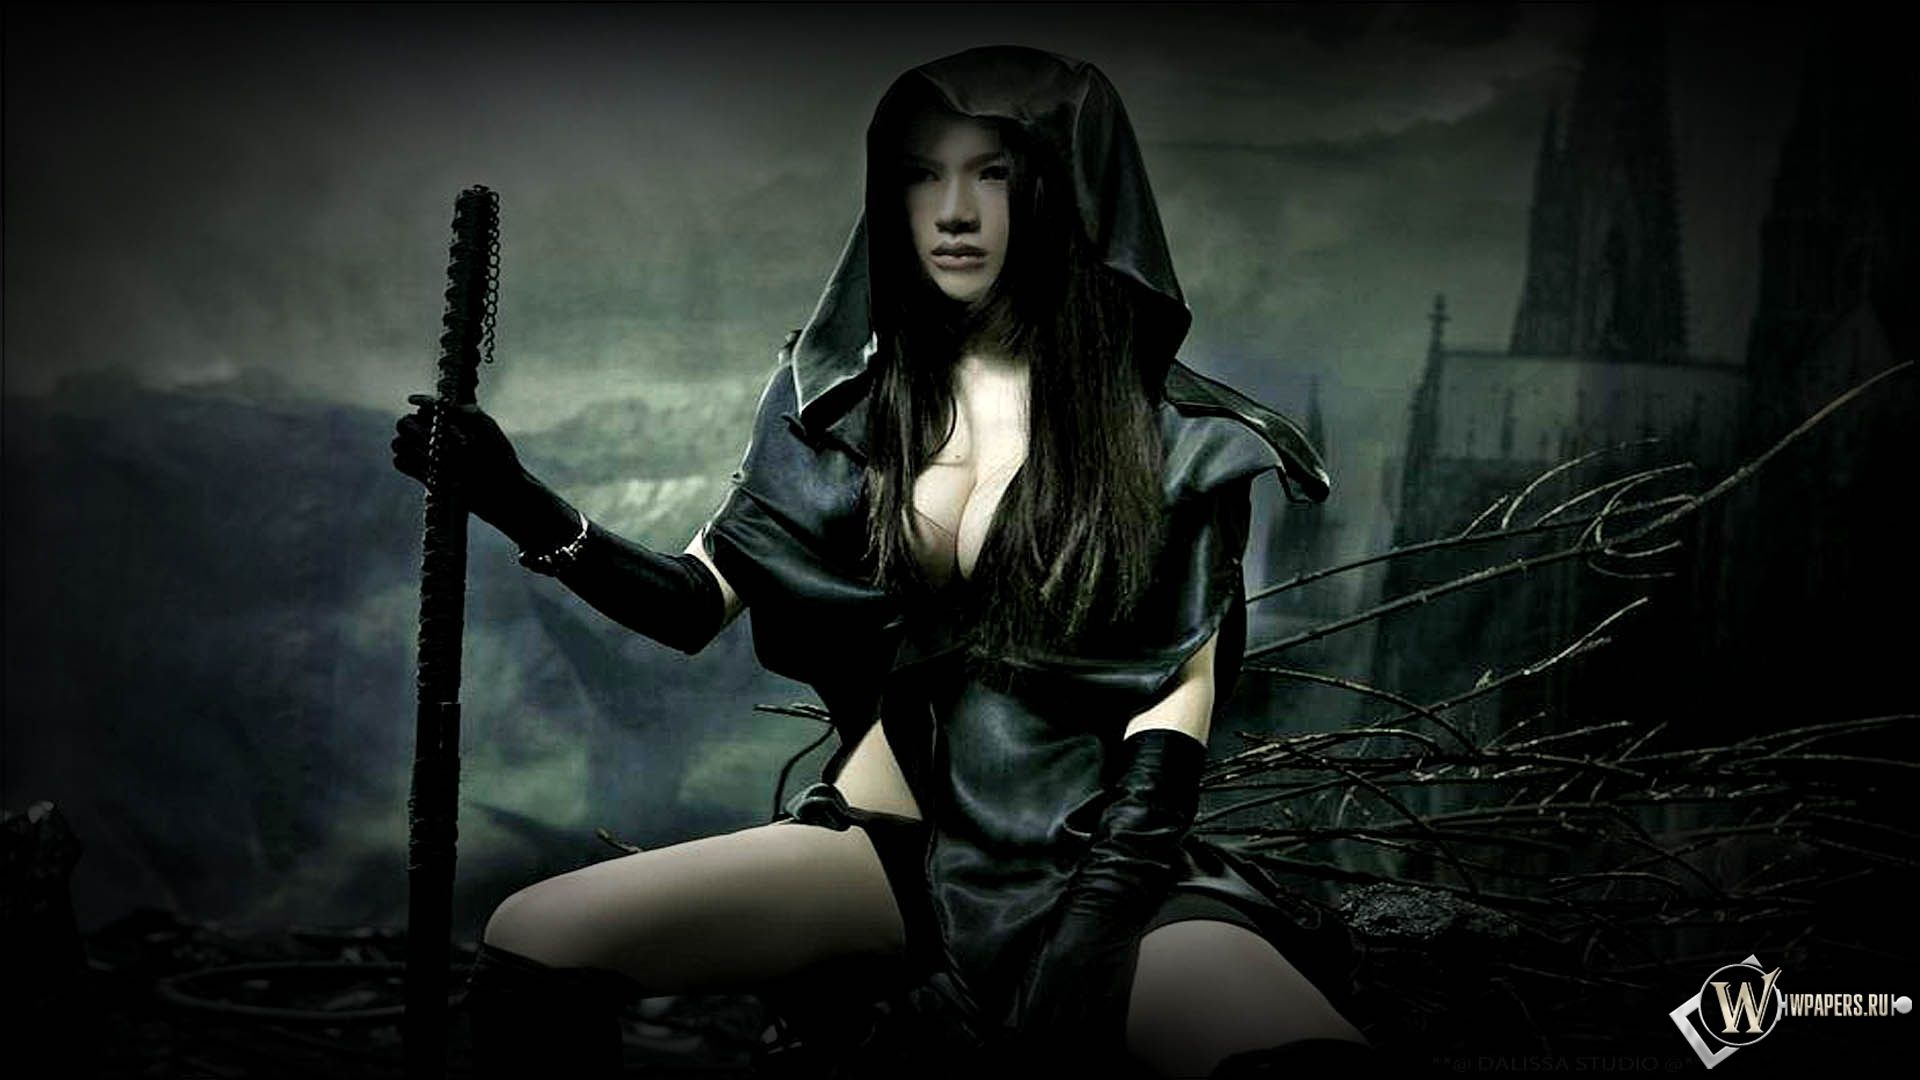 Unique Dark Anime Girl Gothic Female The Witch Fantasy (id: 170895